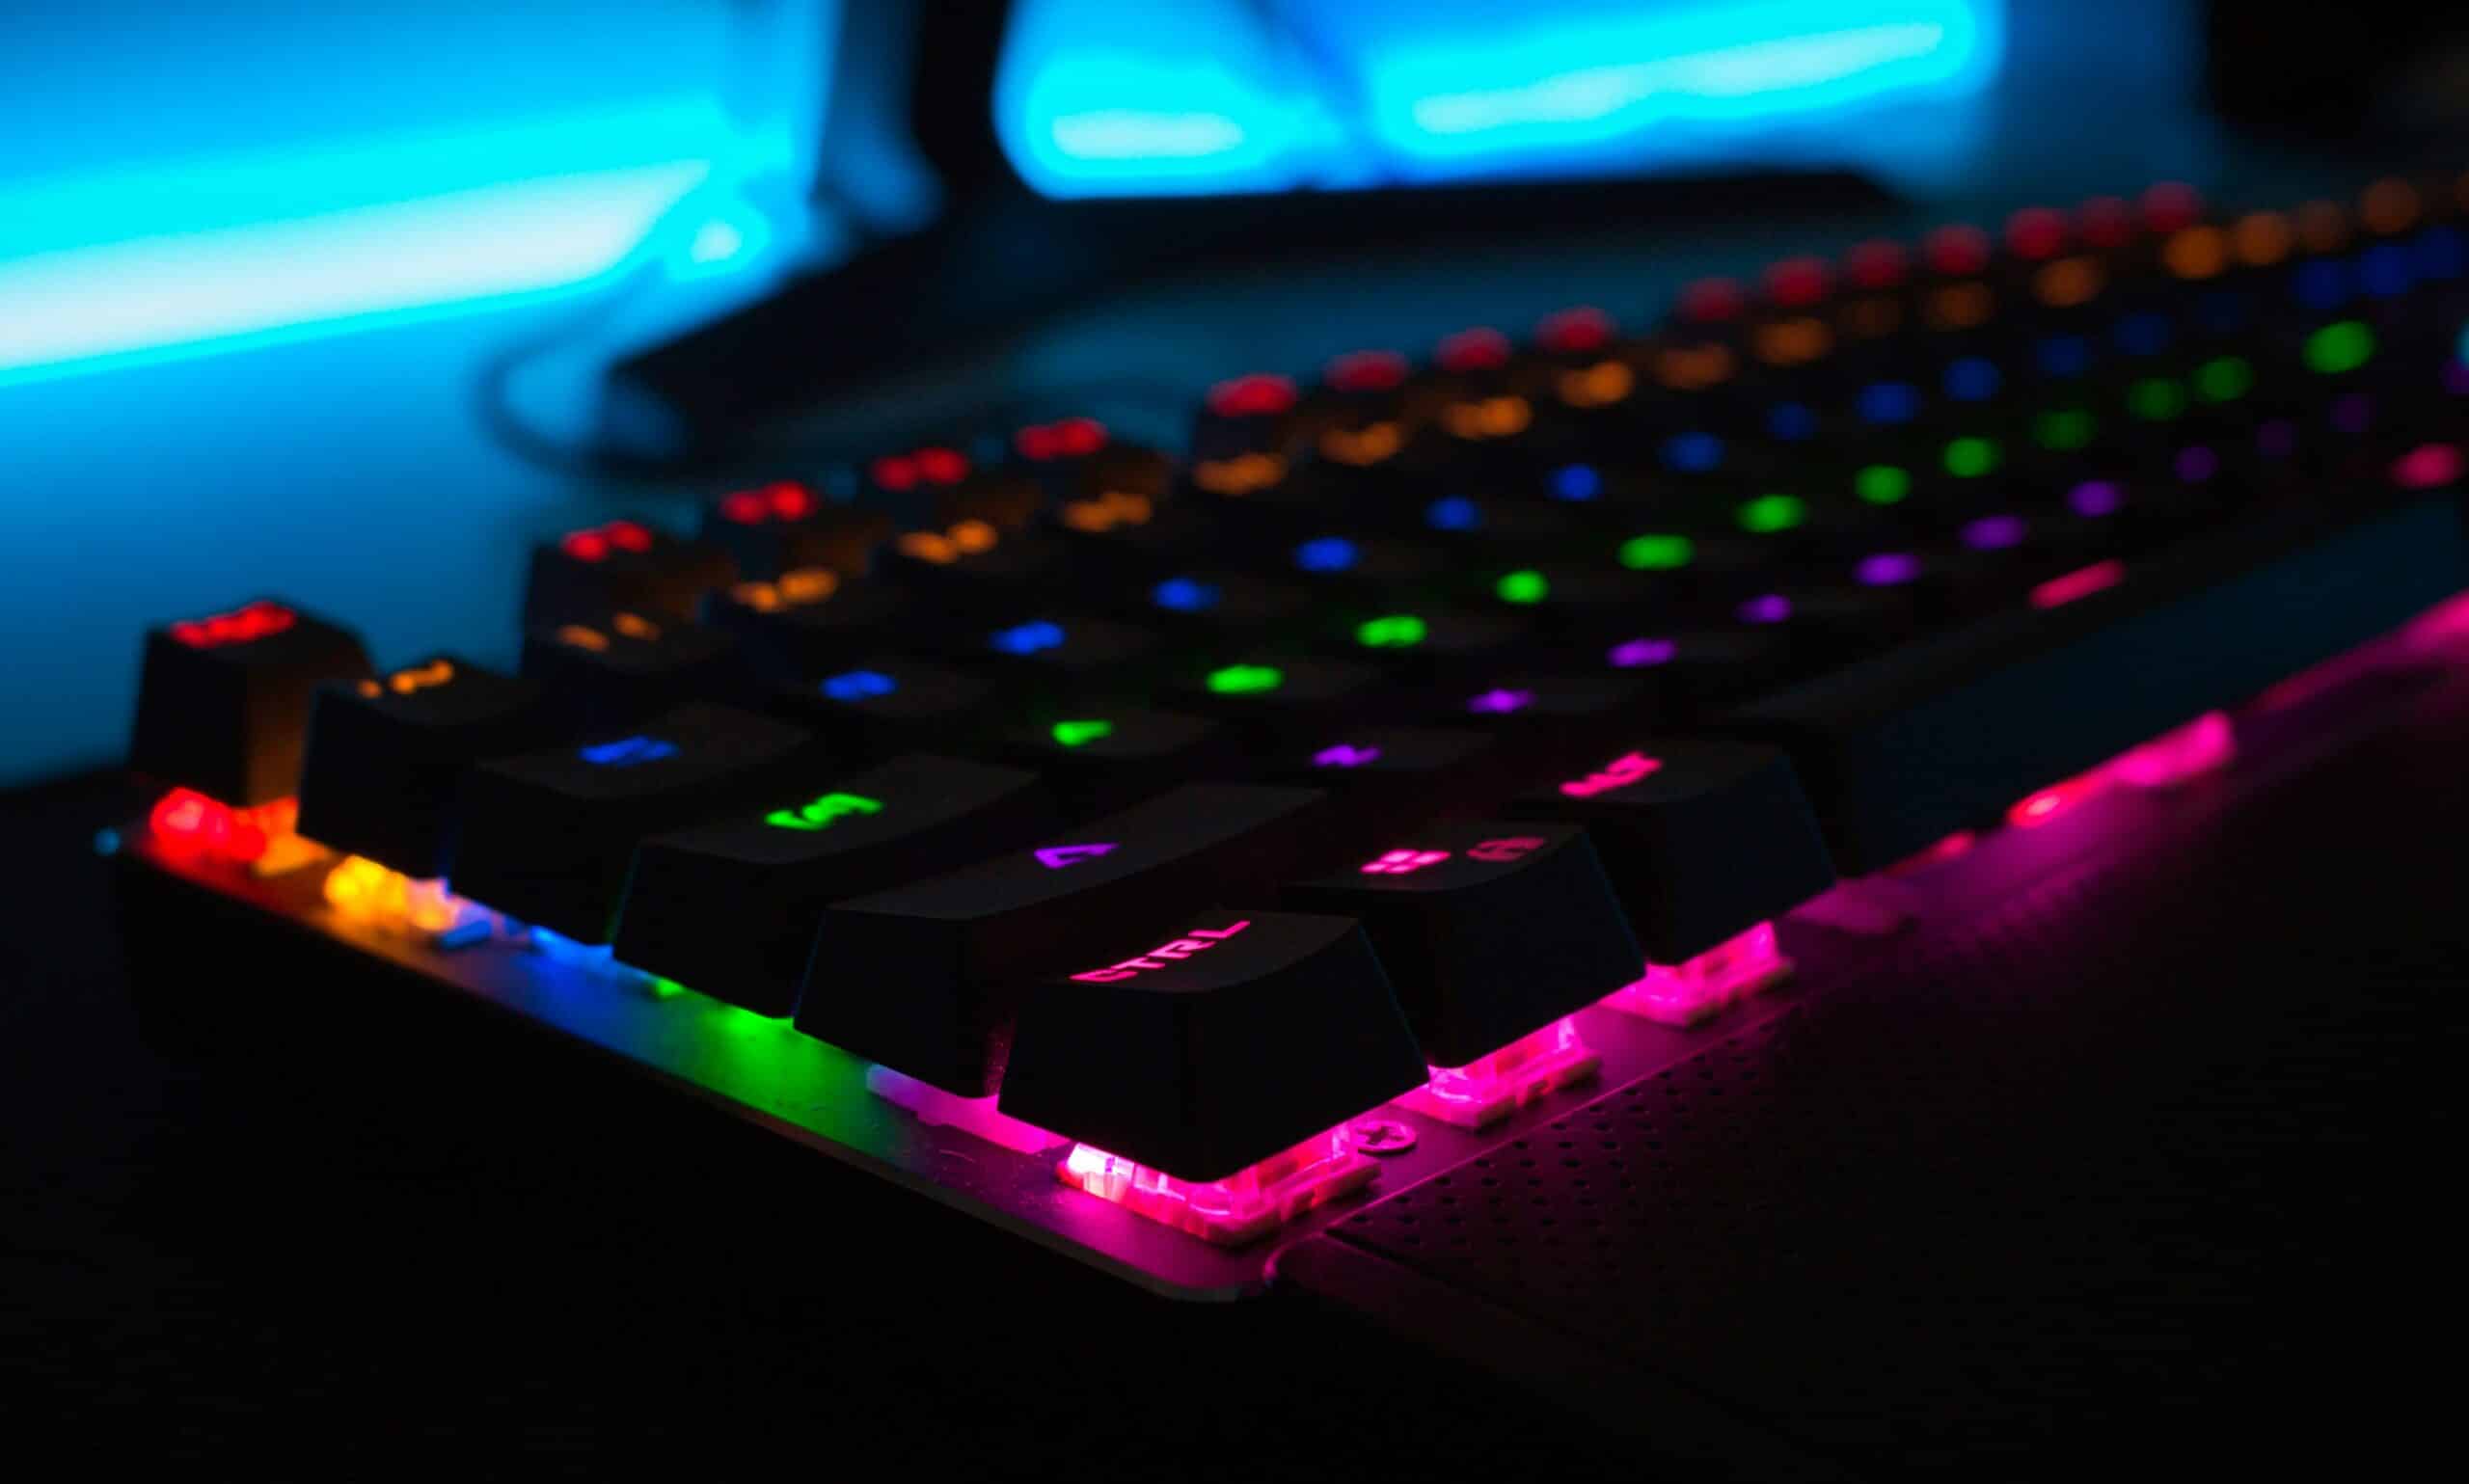 Computer Tastatur